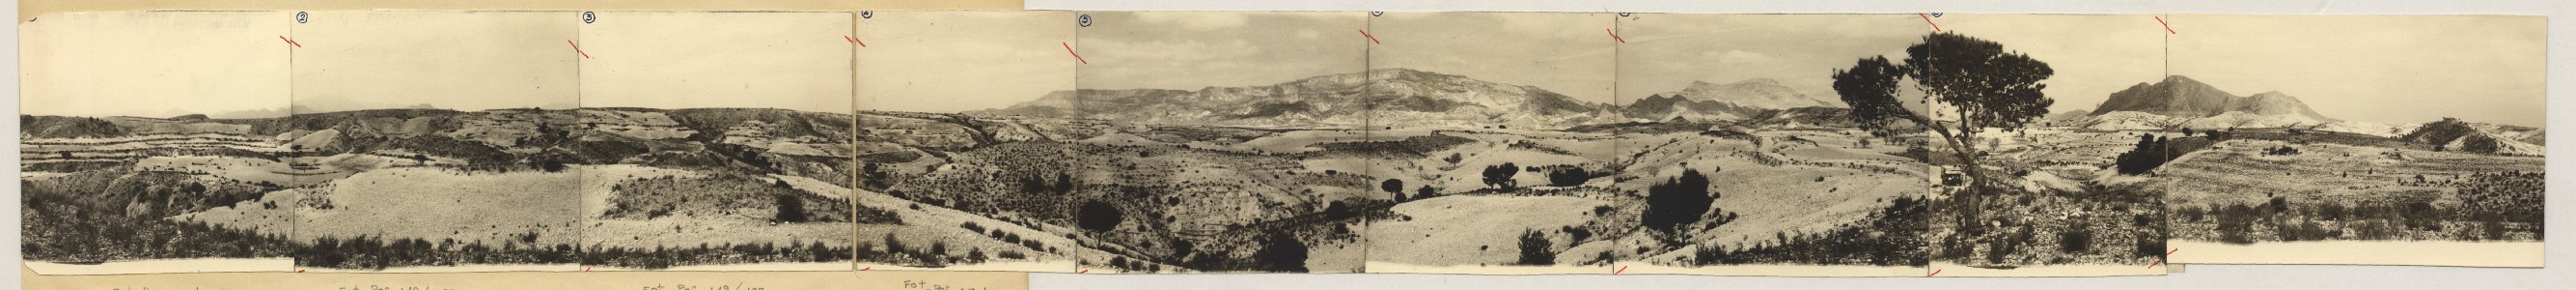 Reportaje fotográfico sobre el paraje de la Loma Gea, en el término municipal de Molina de Segura